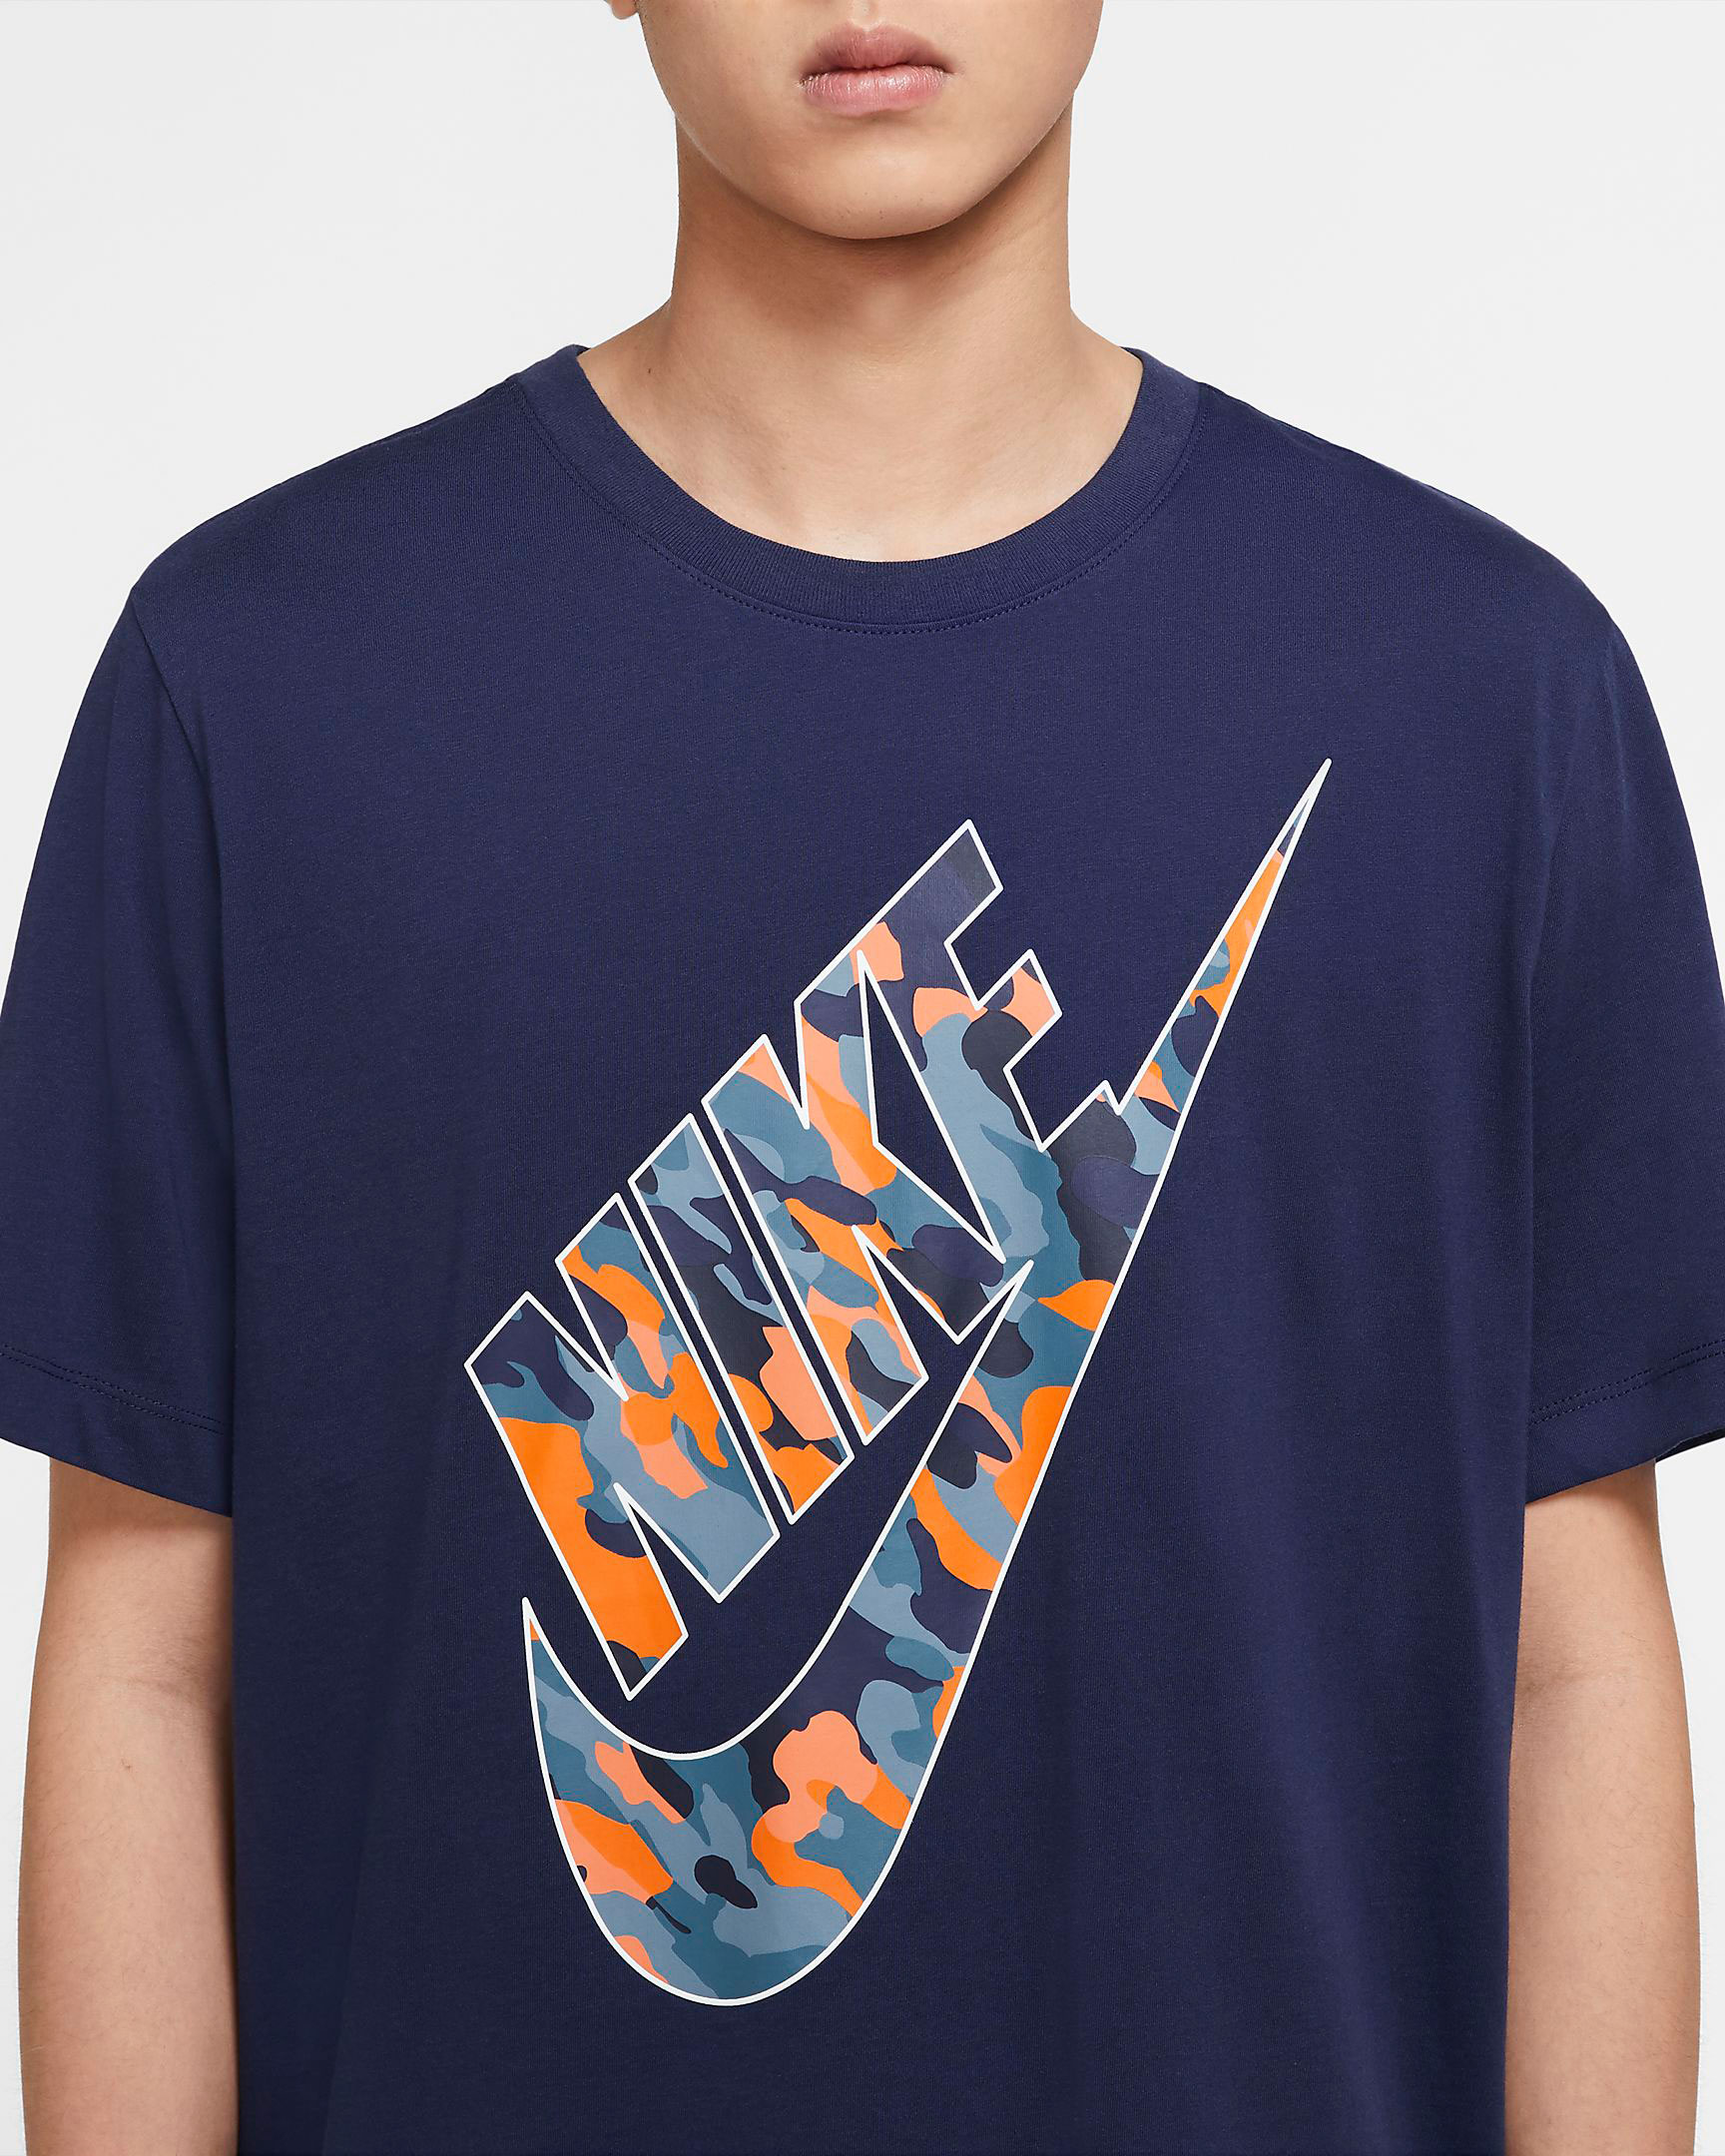 Buy > nike blue and orange shirt > in stock